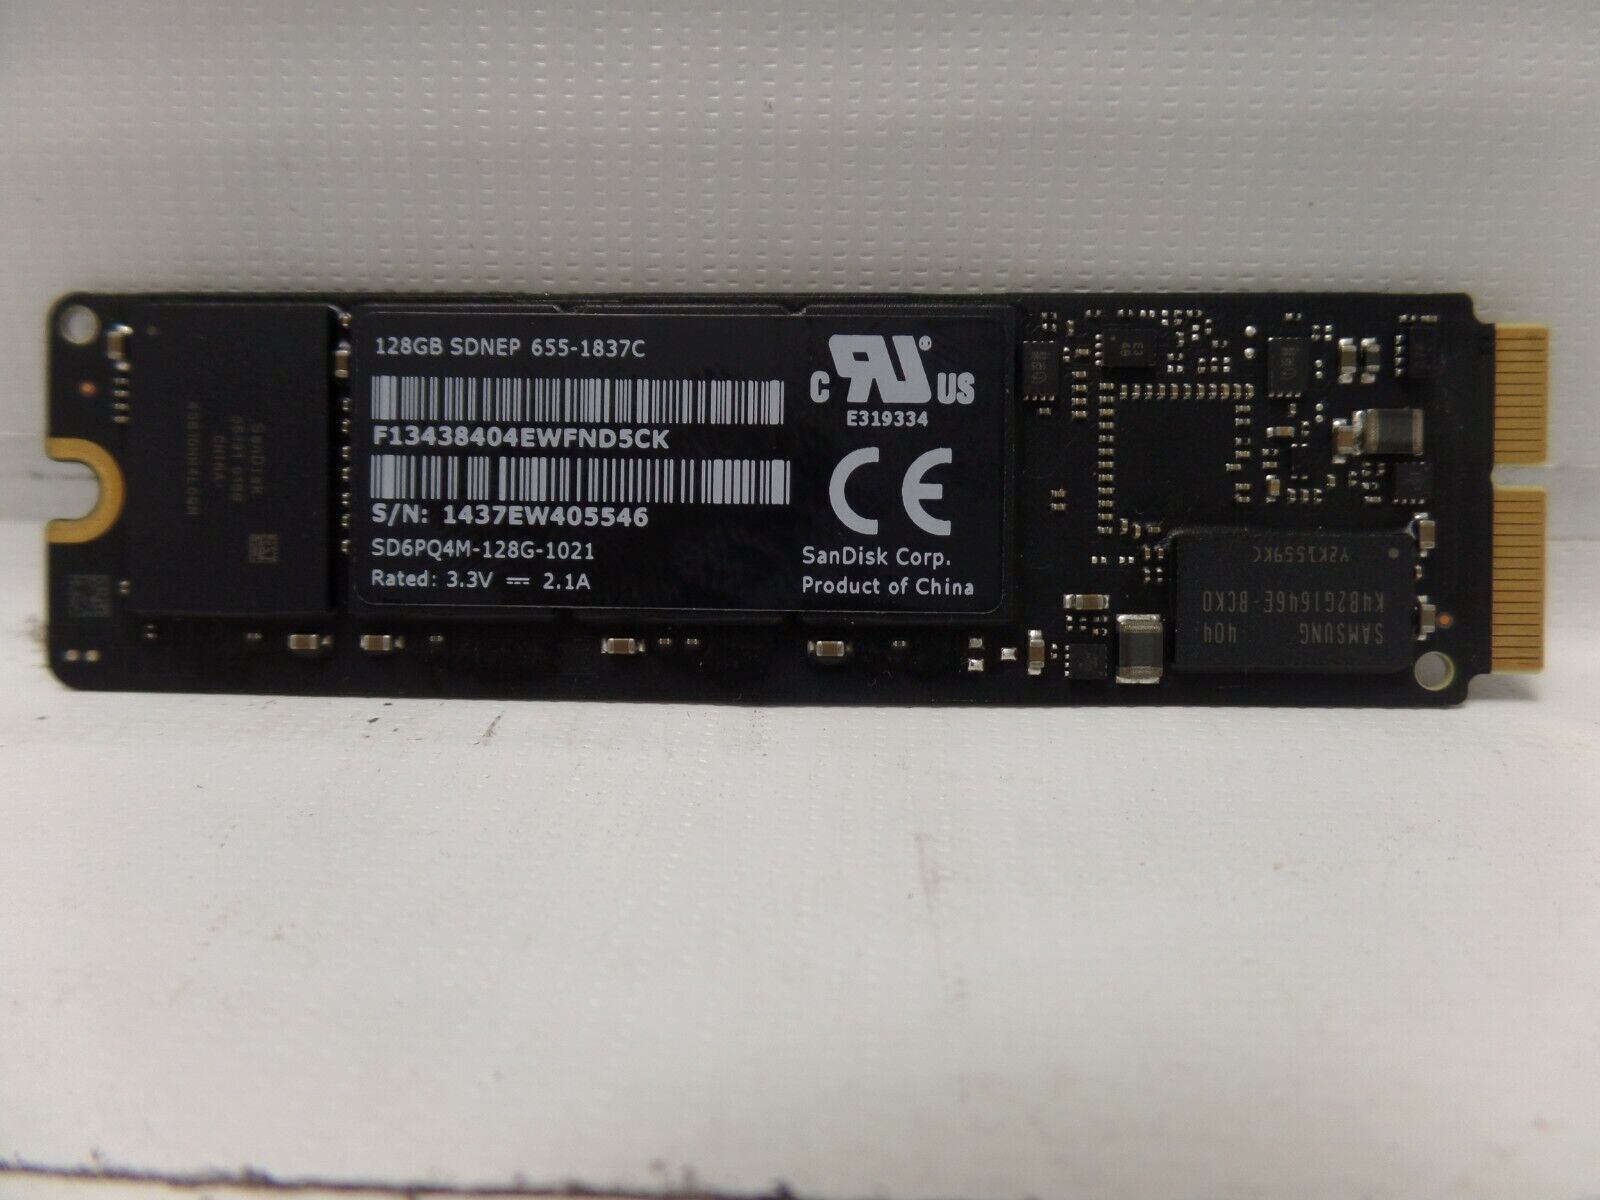 128GB SSD Pcie for Apple MacBook Air A1466 / A1465 2013 2014 2015 2017 655-1837C